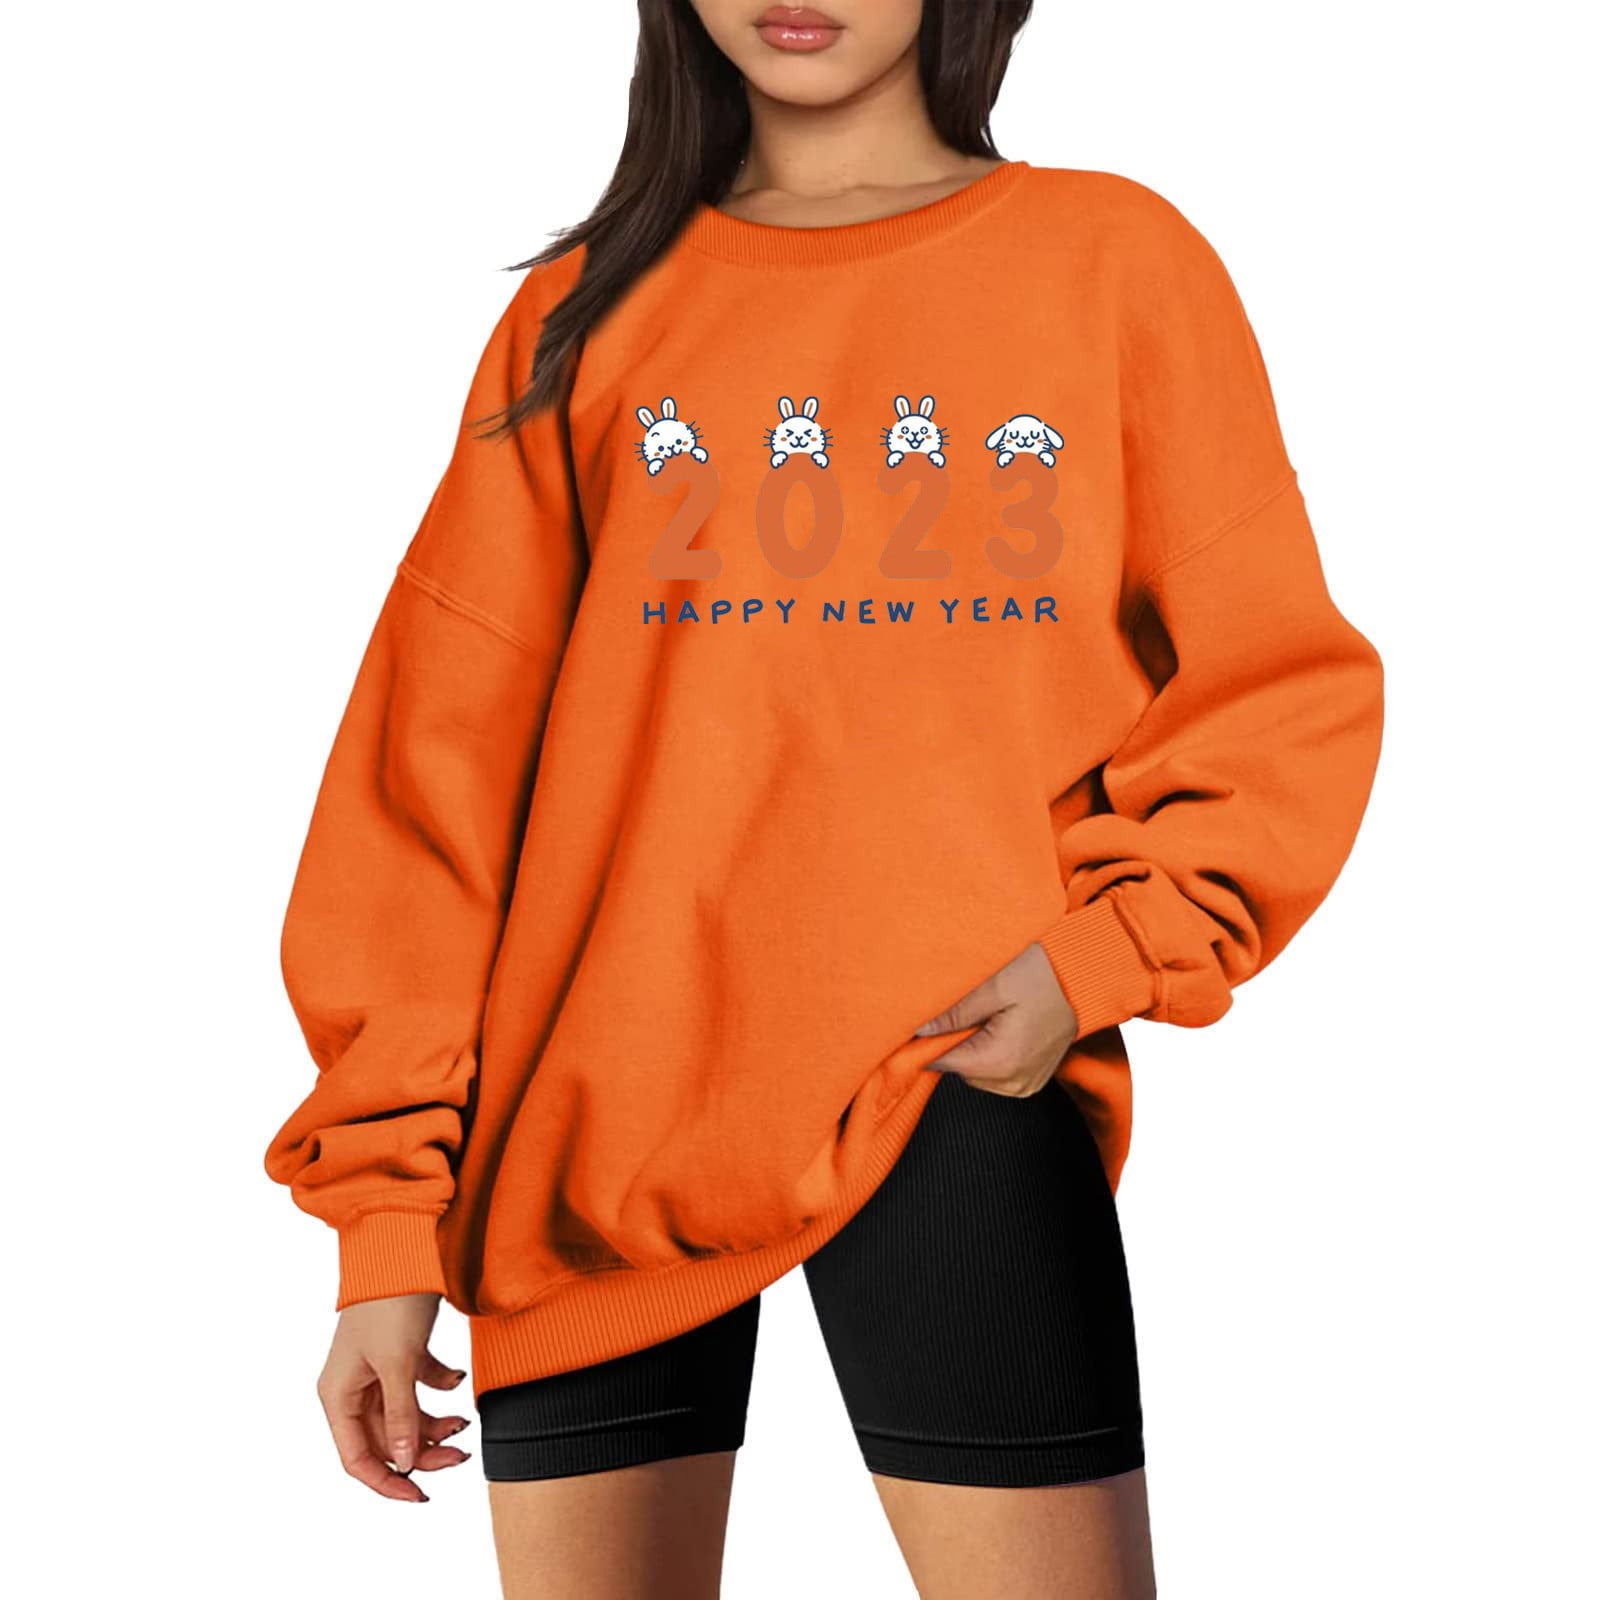 Yyeselk Oversized Sweatshirts for Women Fleece Crewneck Pullover Comfy  Clothes 2023 Graphic Print Loose Sweater Blouse Tee Shirts Tshirts  Tops,Orange XXL 